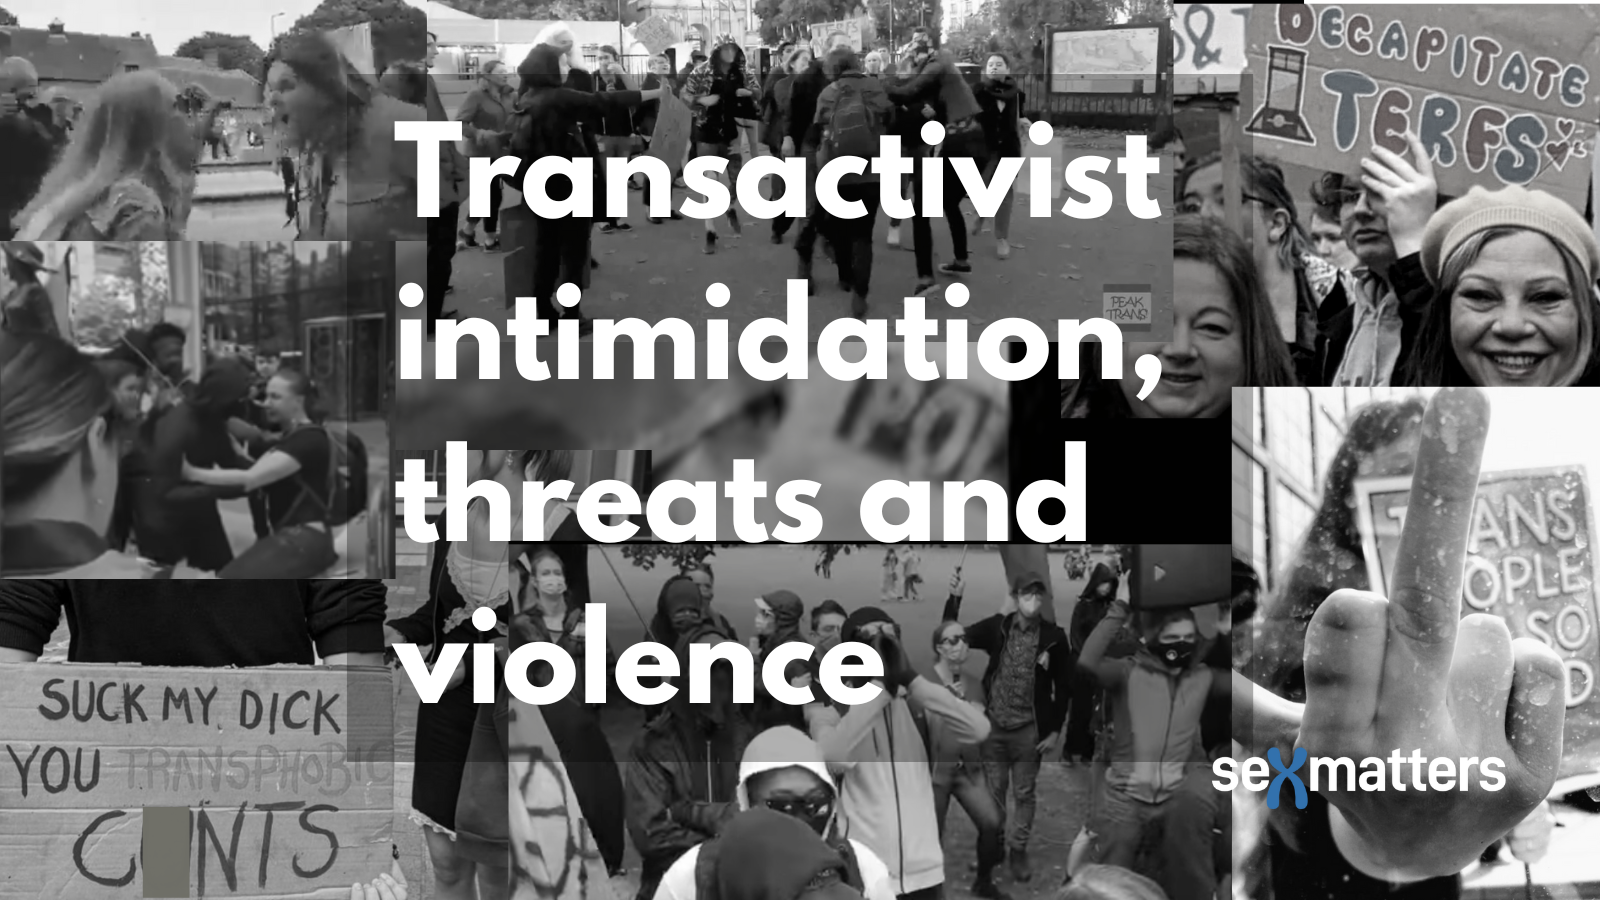 Transactivist intimidation, threats and violence